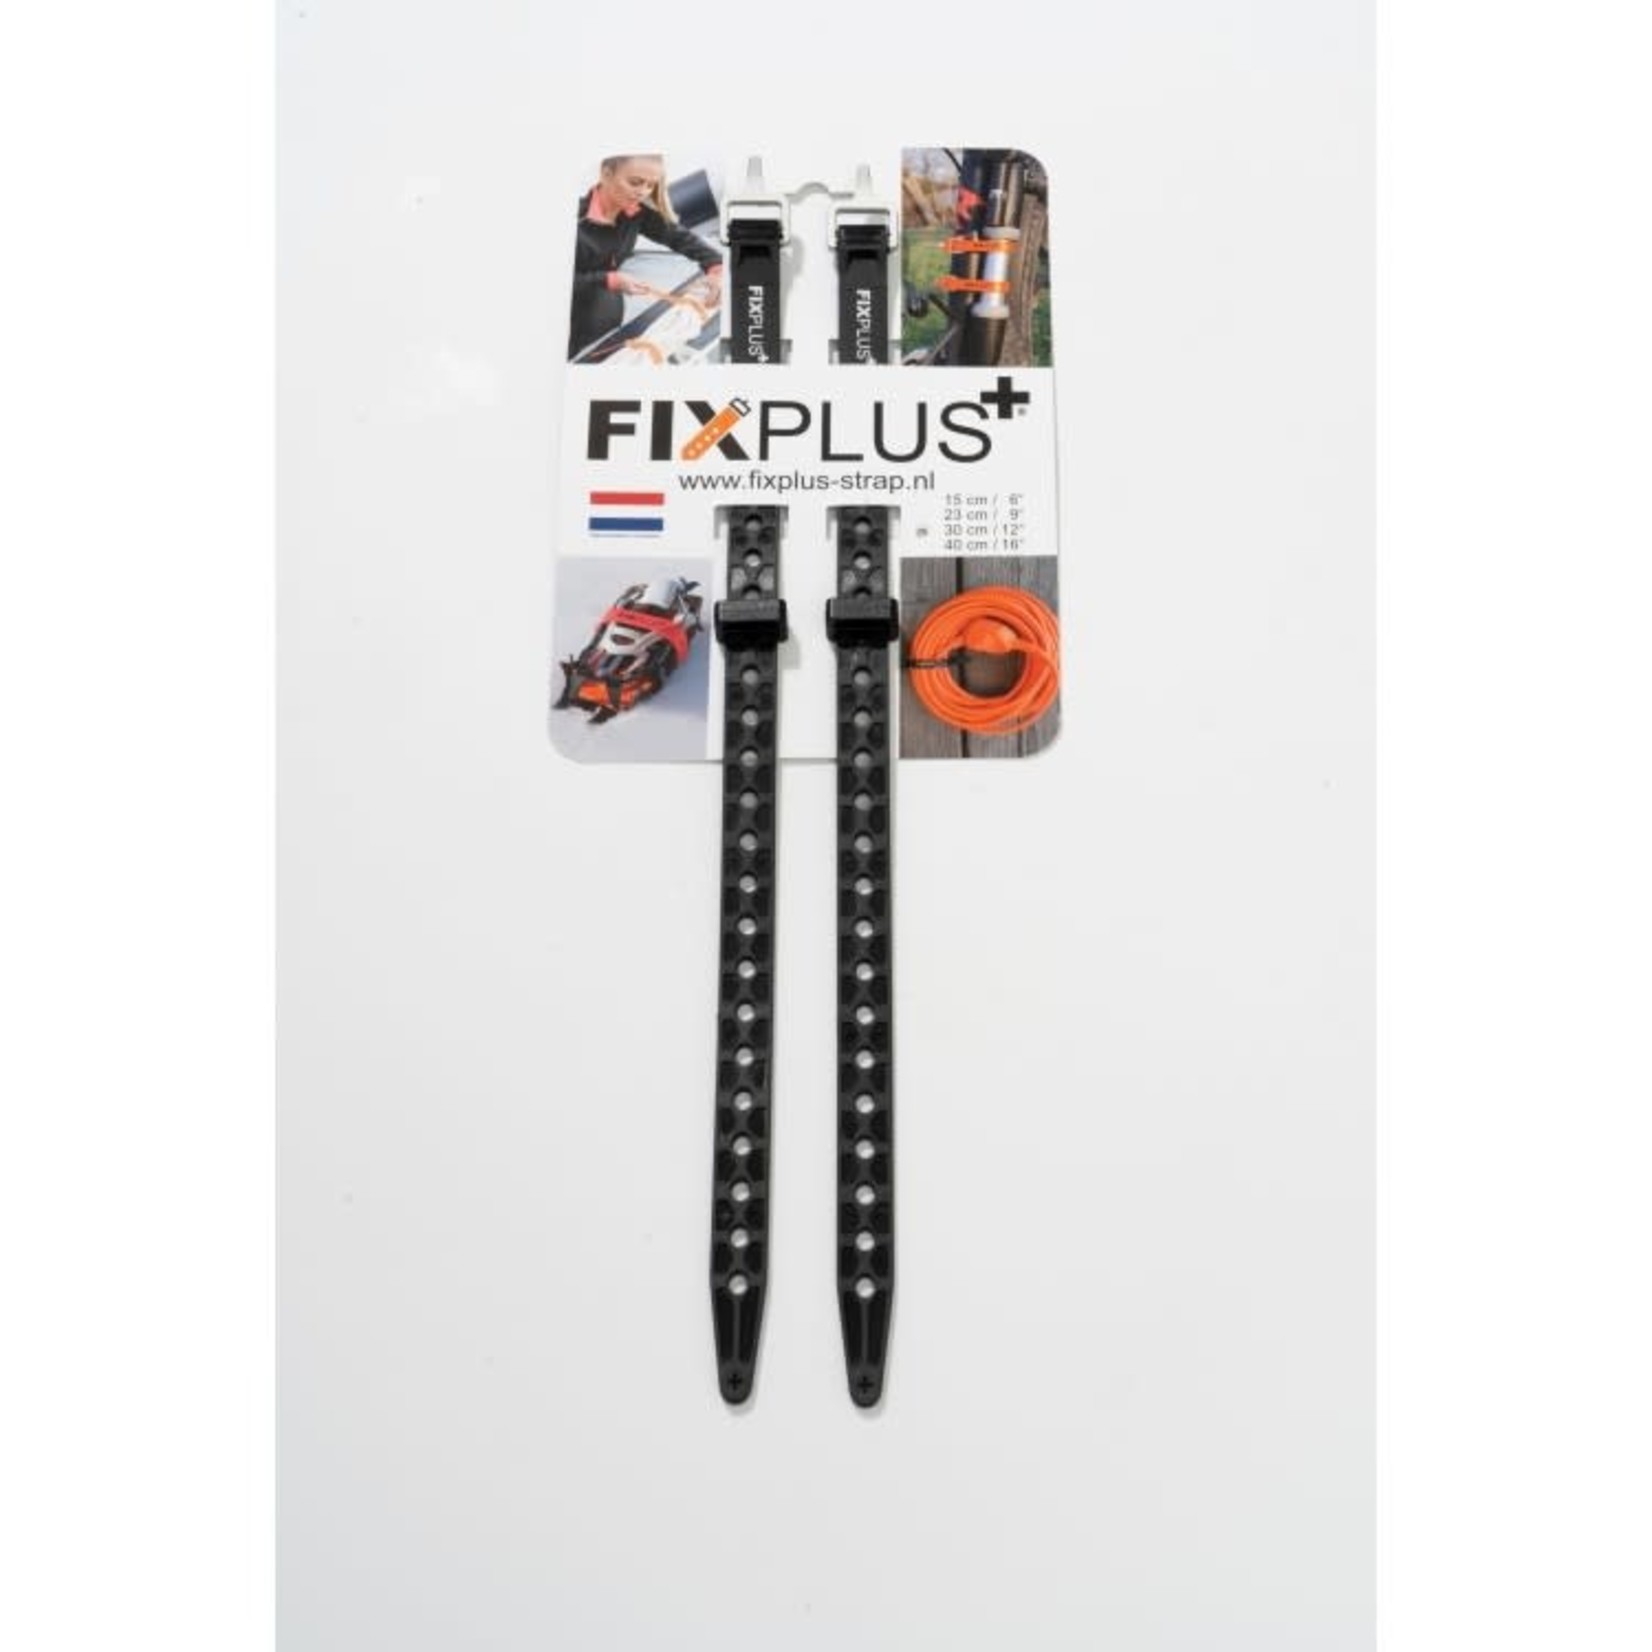 Fixplus Strap set